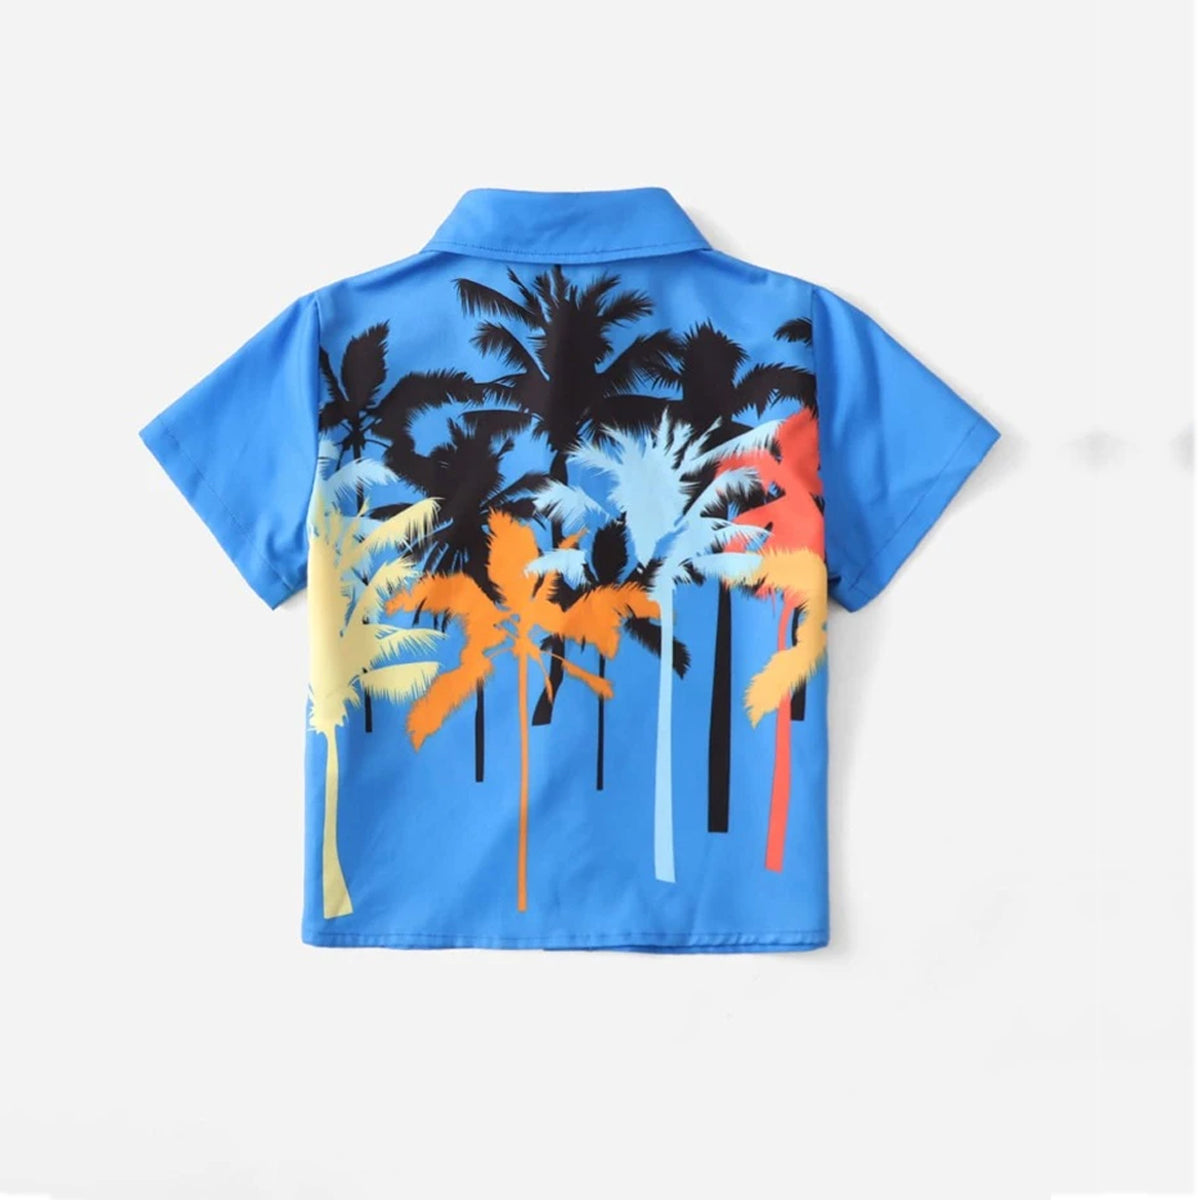 Venutaloza Tropical Coconut Tree & Fruits Designer Button Front Shirt For Boy.